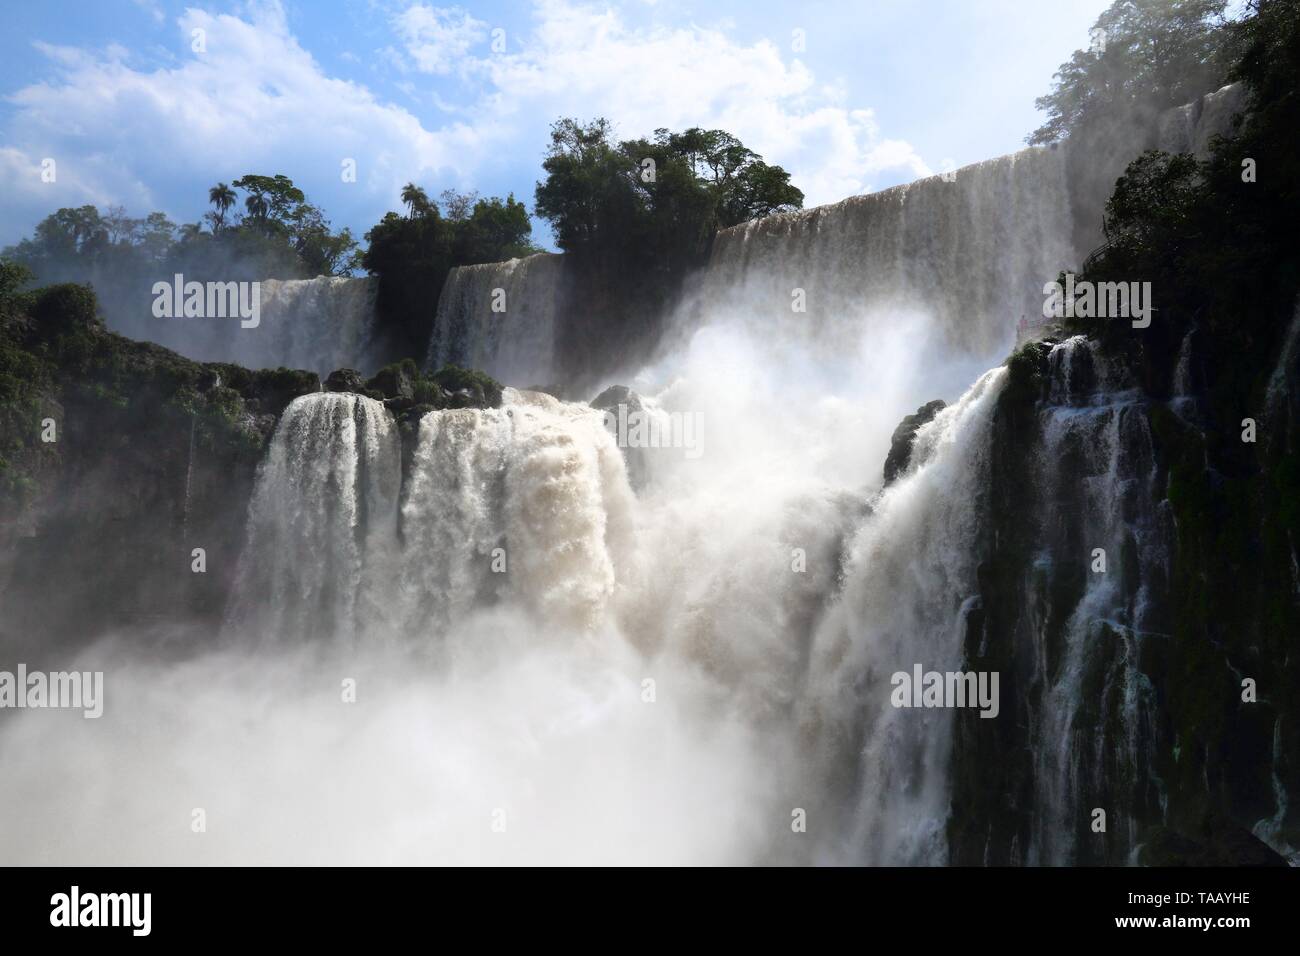 Iguazu Falls landscape - natural wonder in Argentina. Stock Photo